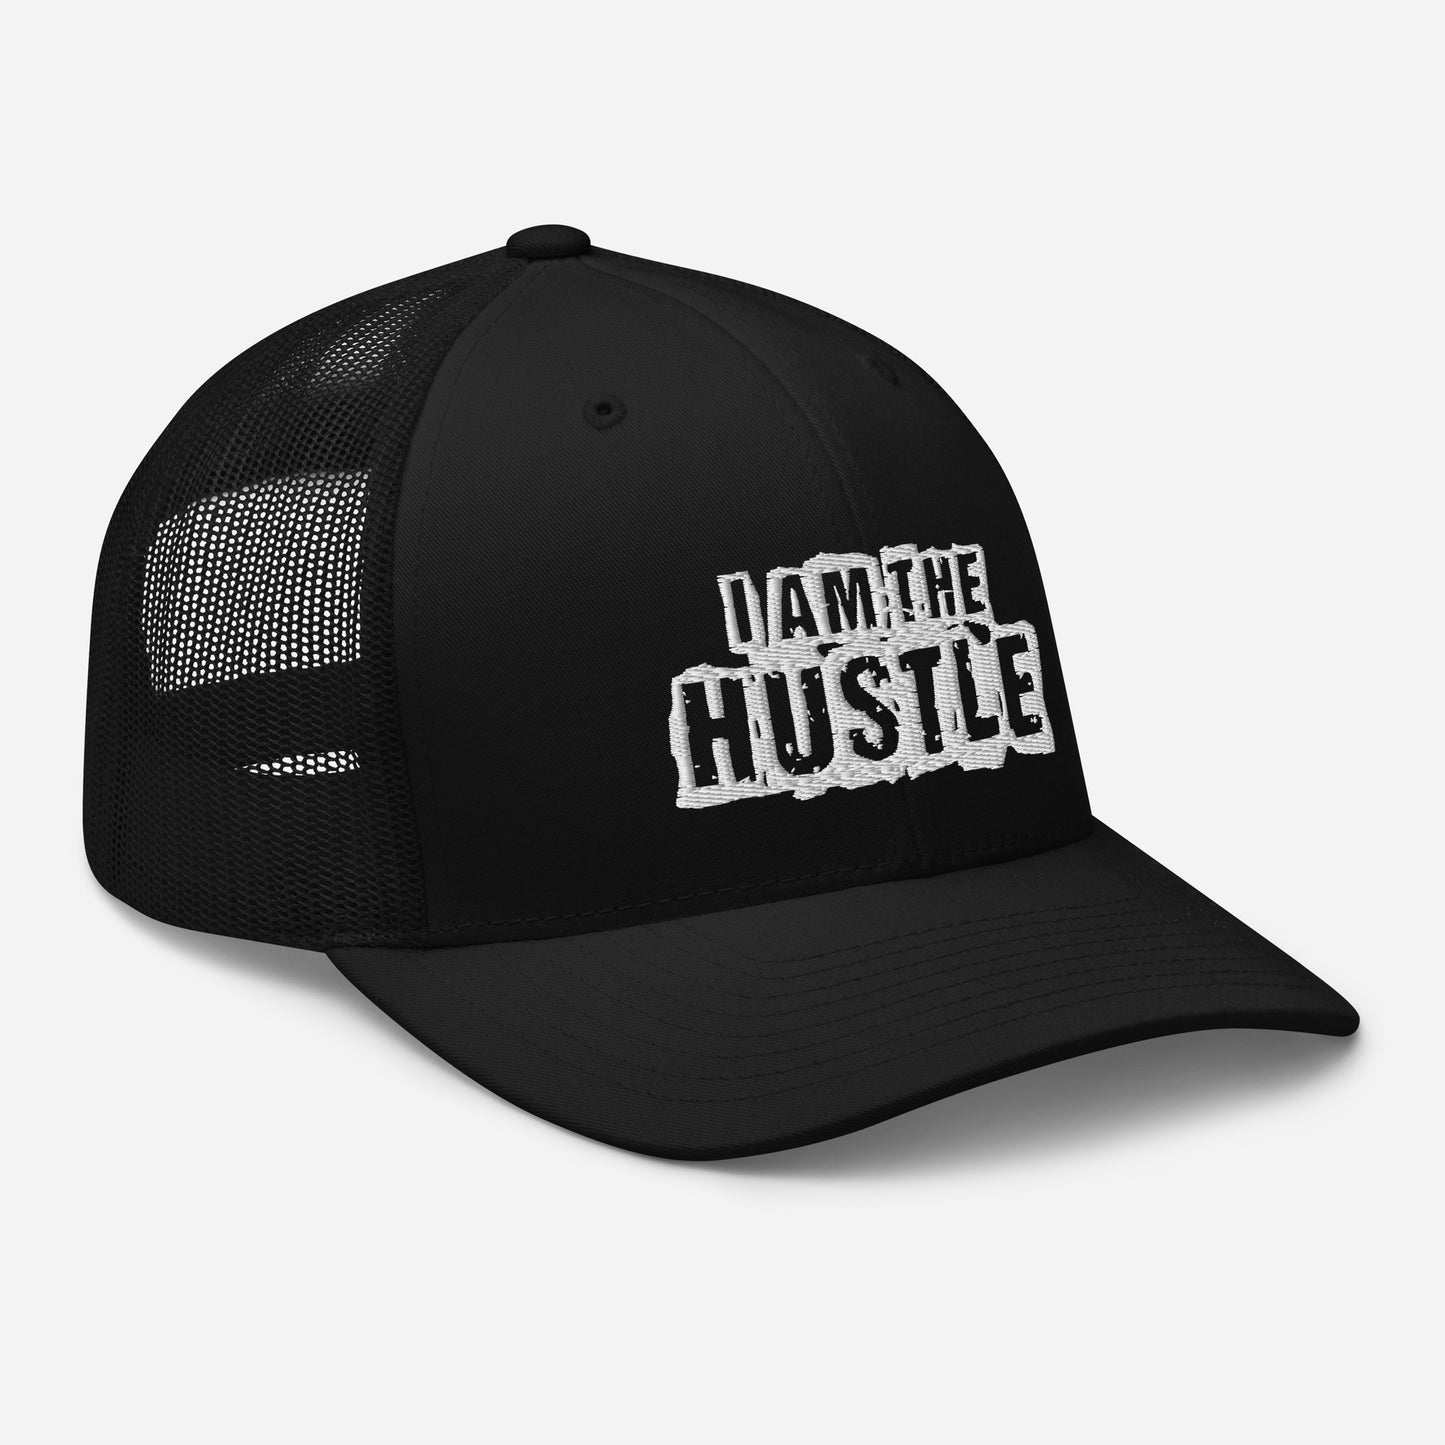 I am the Hustle Trucker Cap